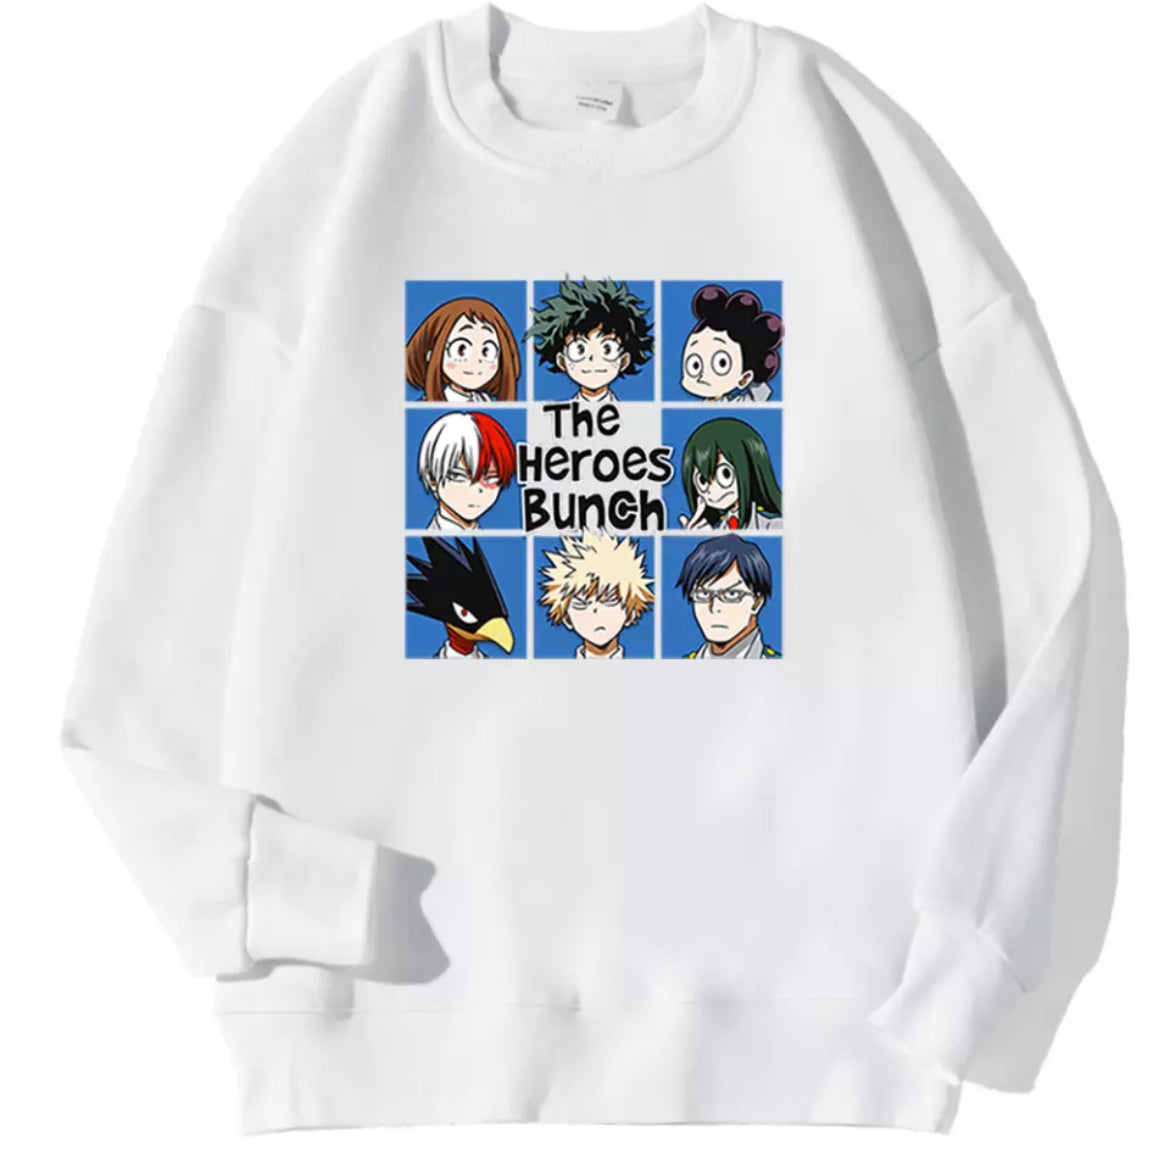 The Heroes Sweatshirt